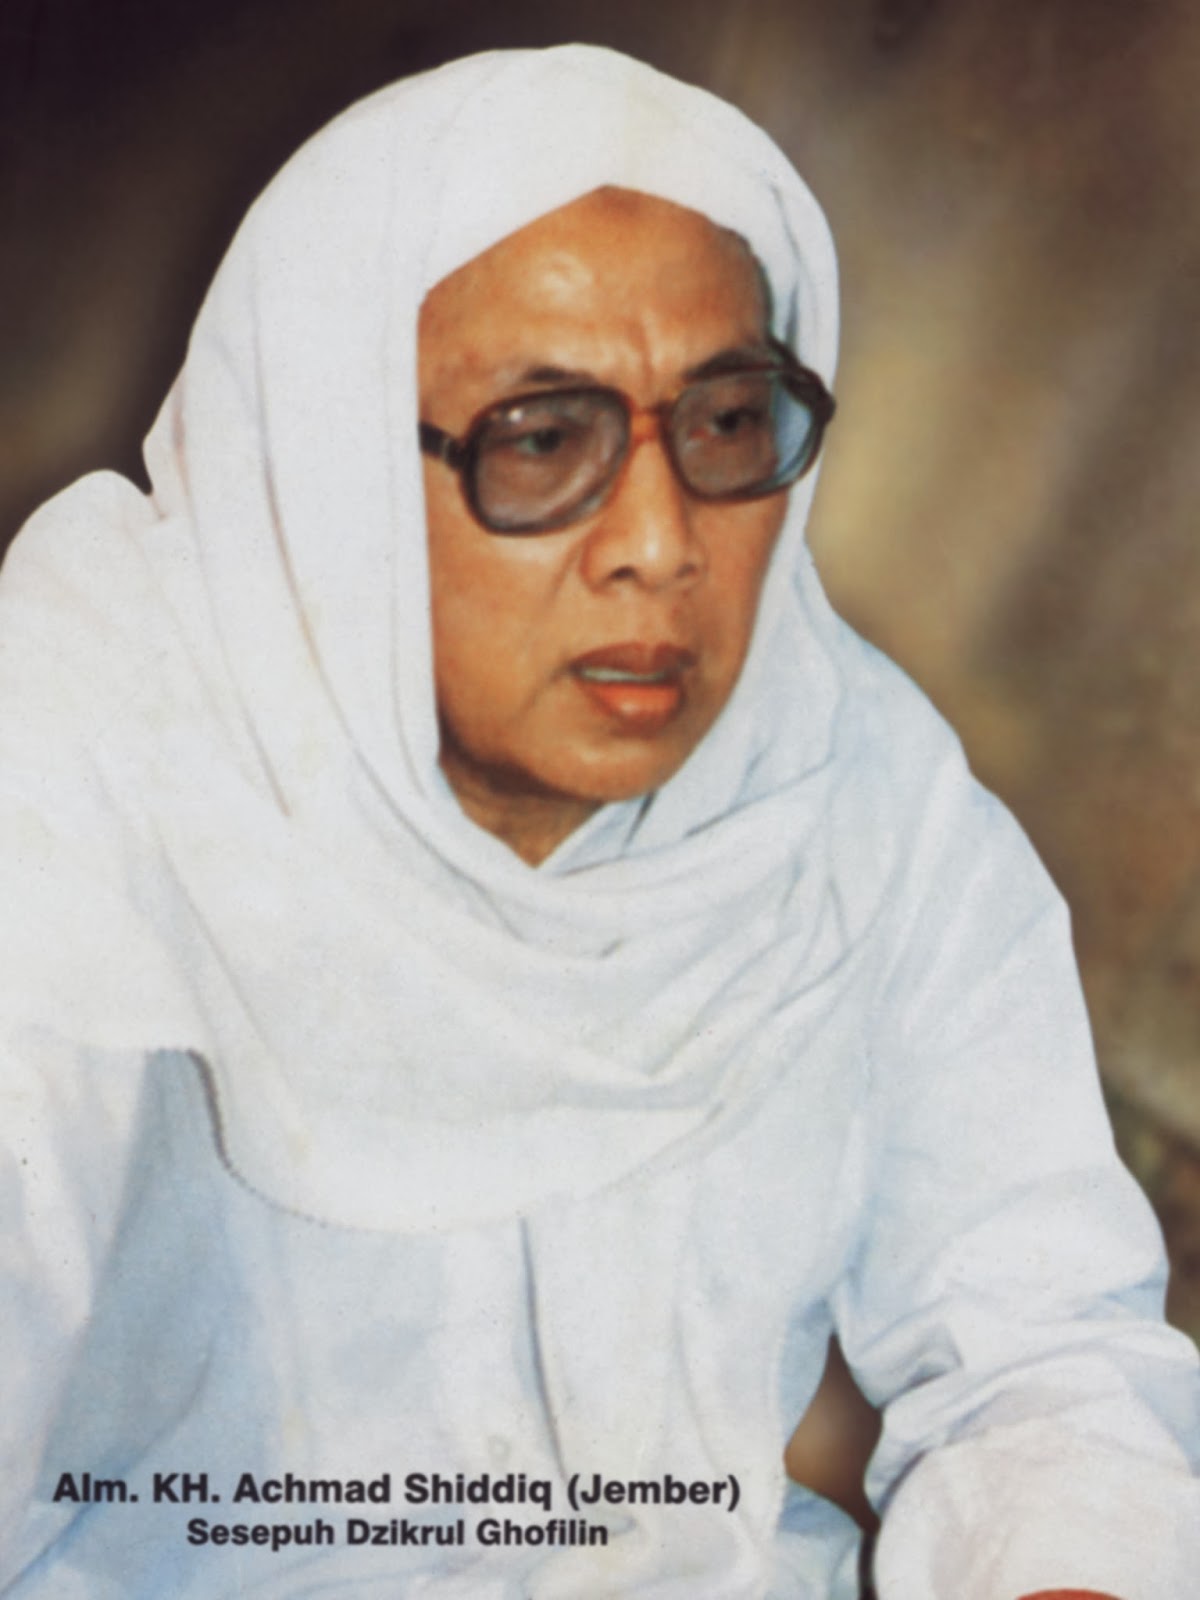 KH. Achmad Siddiq Pencetus Kembali ke Khitah Nahdlatul Ulama (1926)   